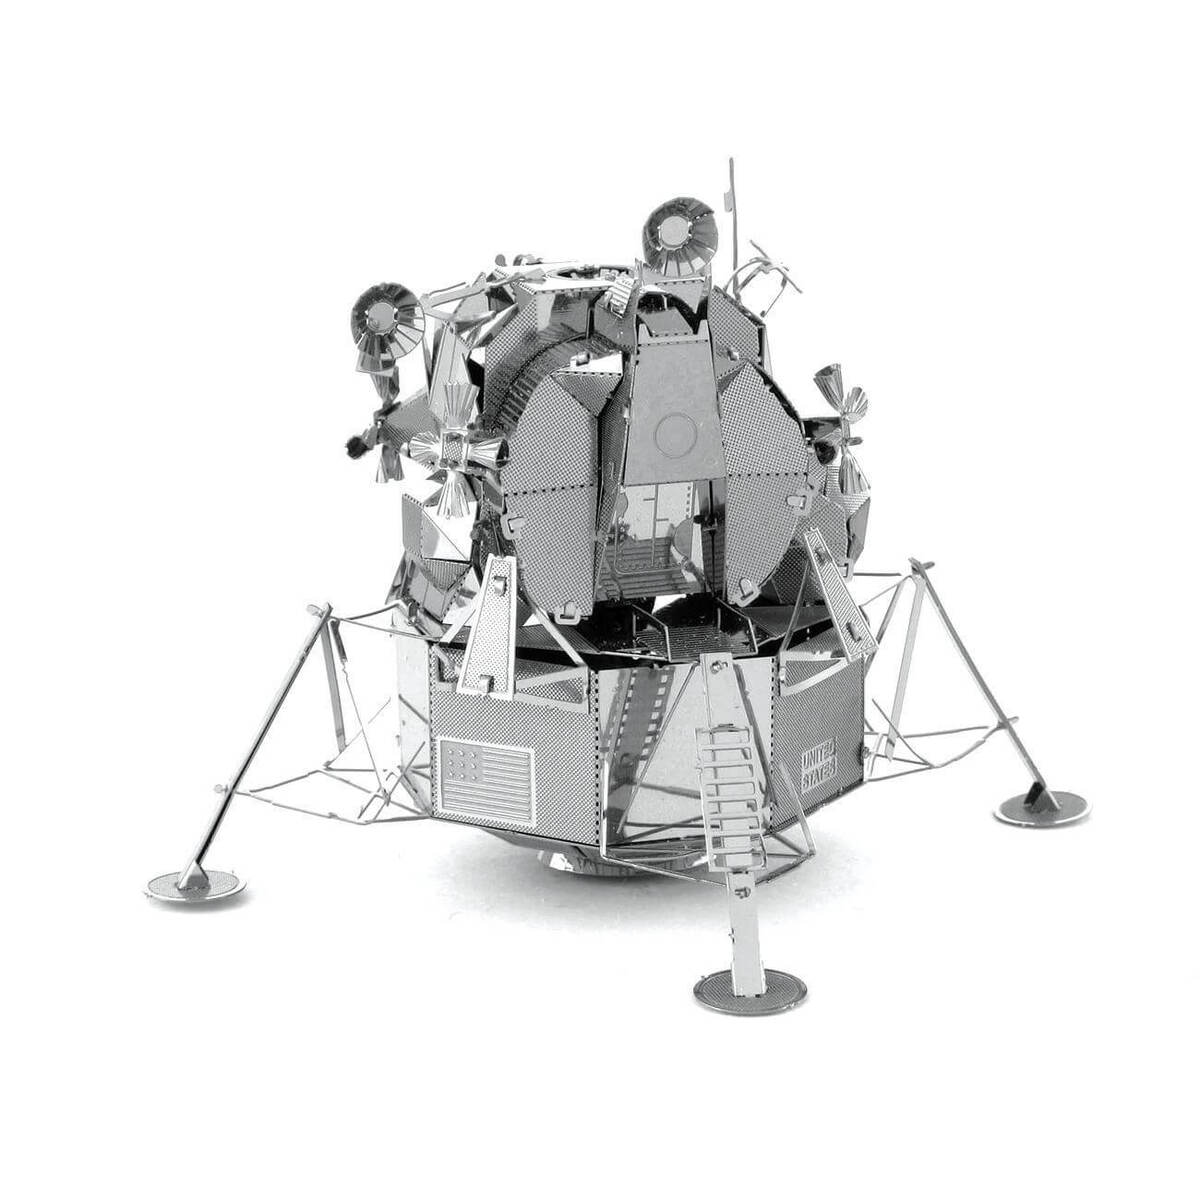 Tweezer  010947 Metal Earth Apollo Lunar Rover 3D Metal  Model 